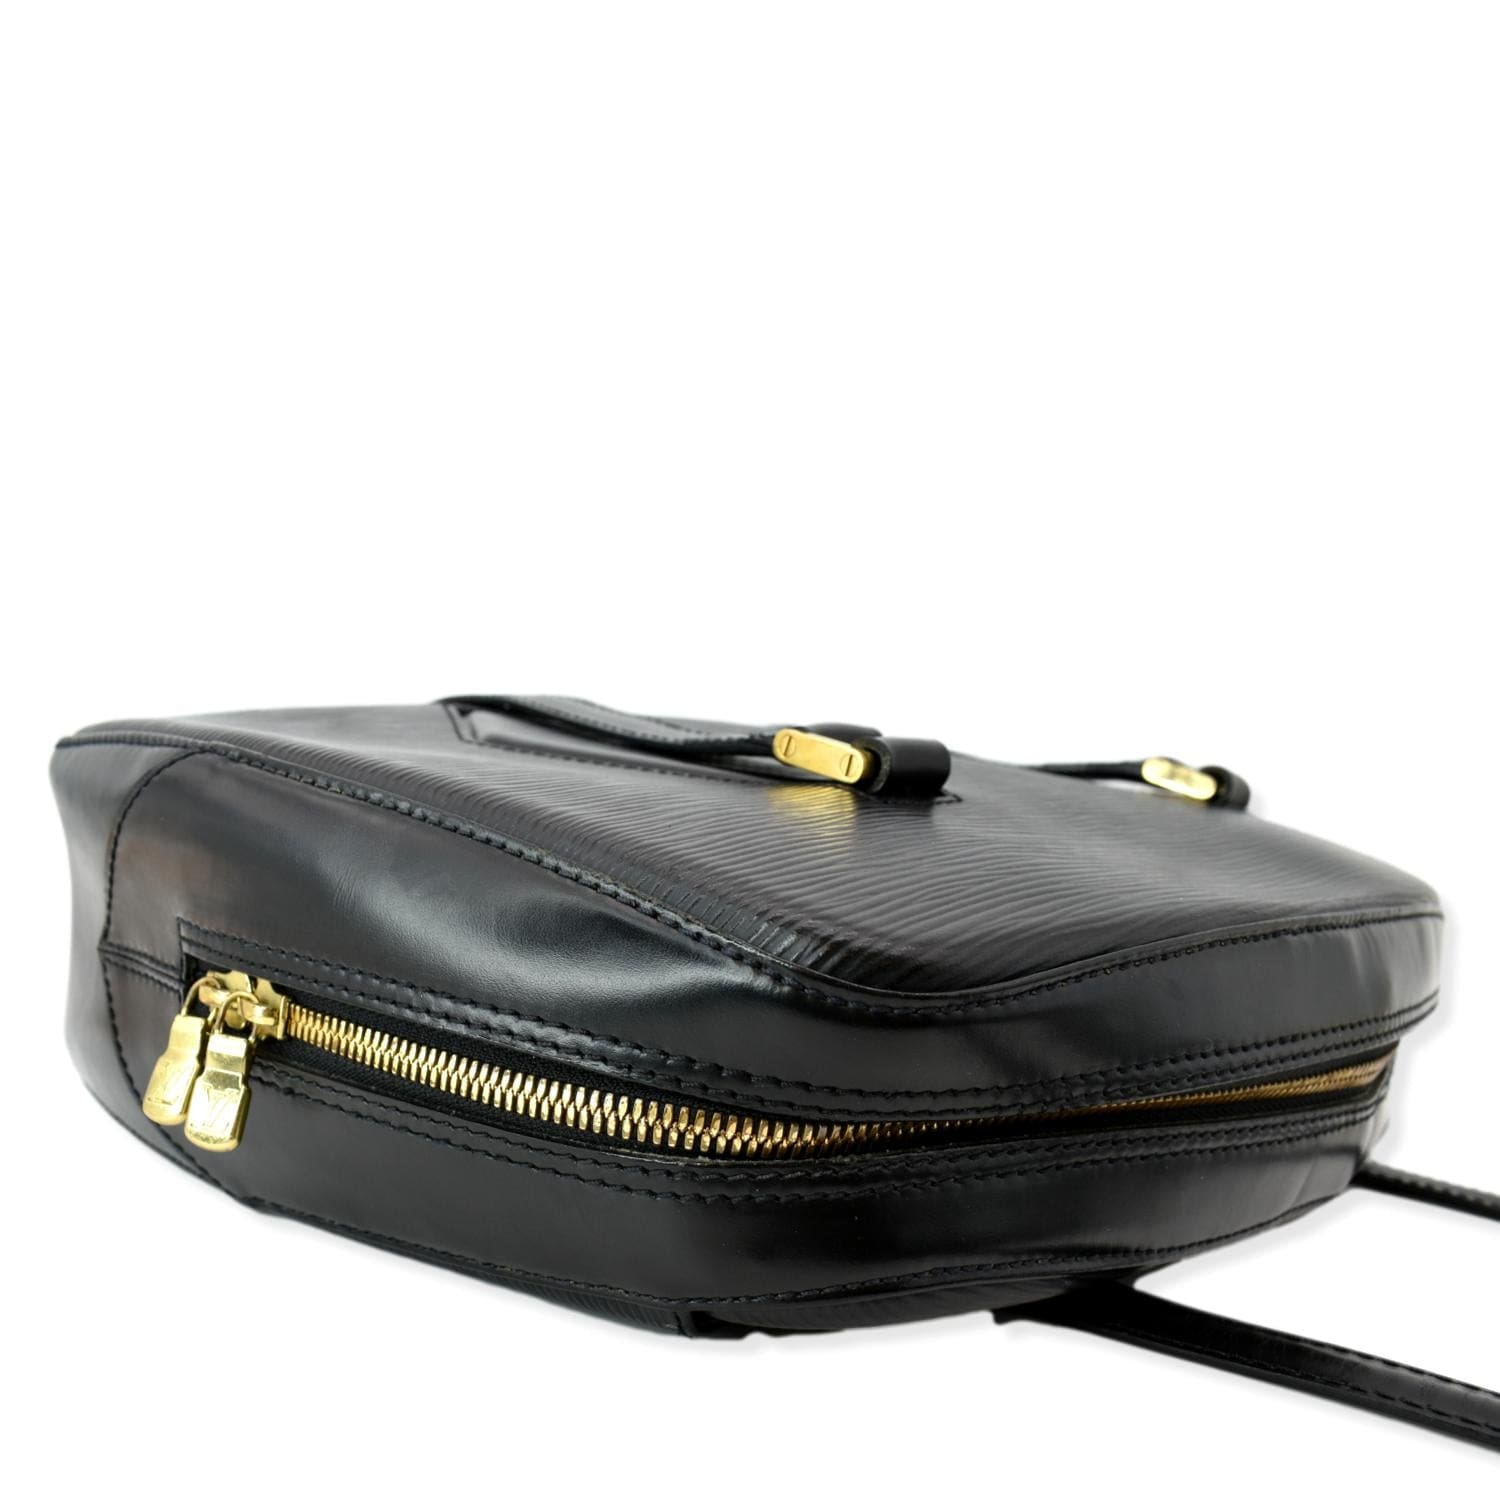 Louis Vuitton Claims New “It Bag” Territory – MaleCritique